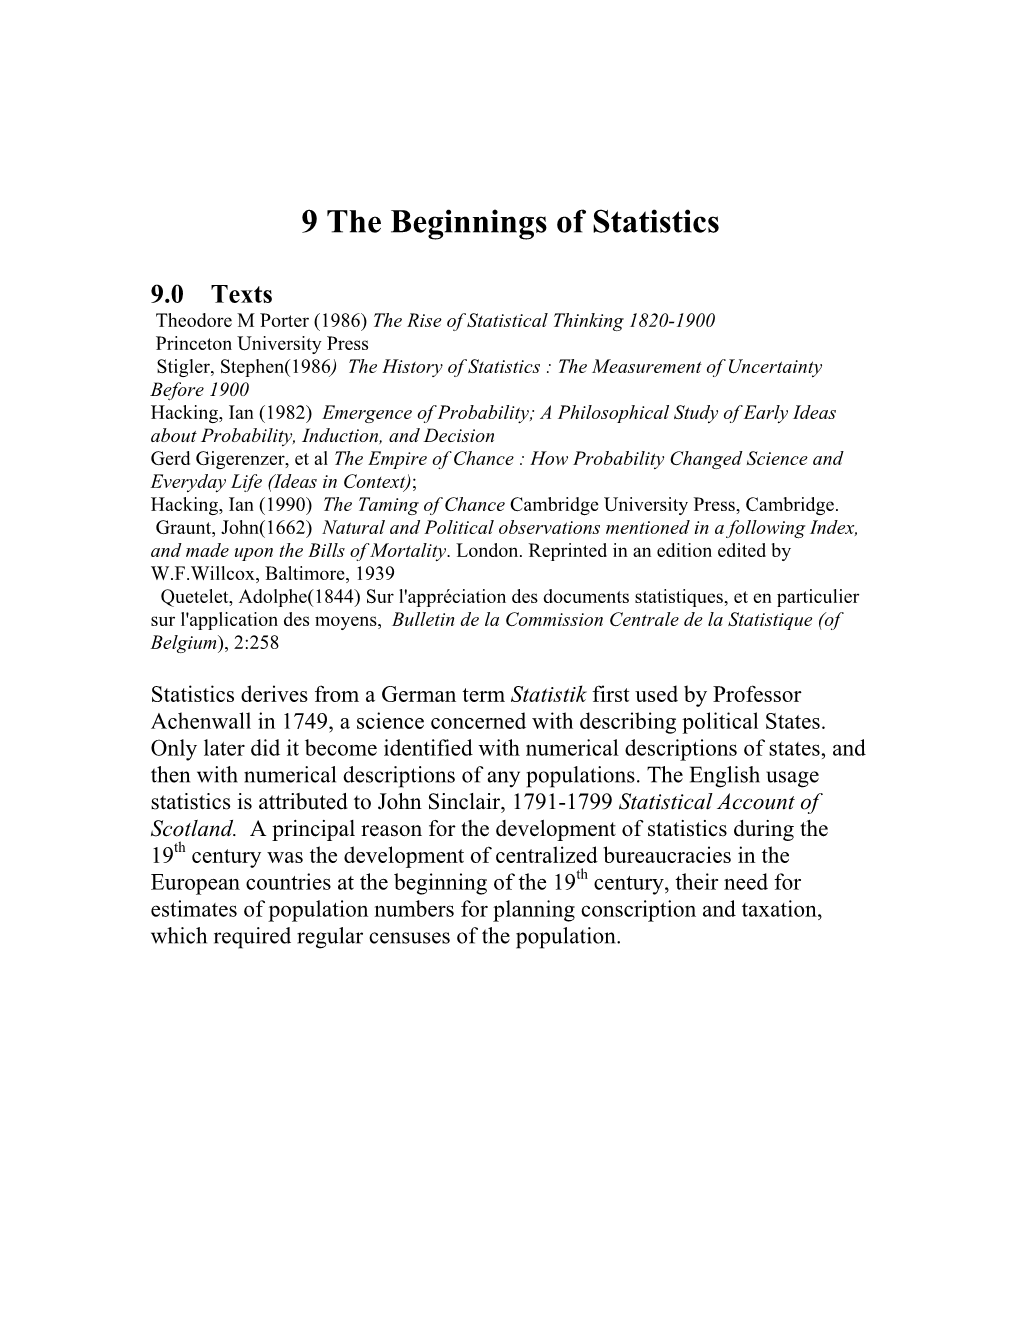 9 the Beginnings of Statistics